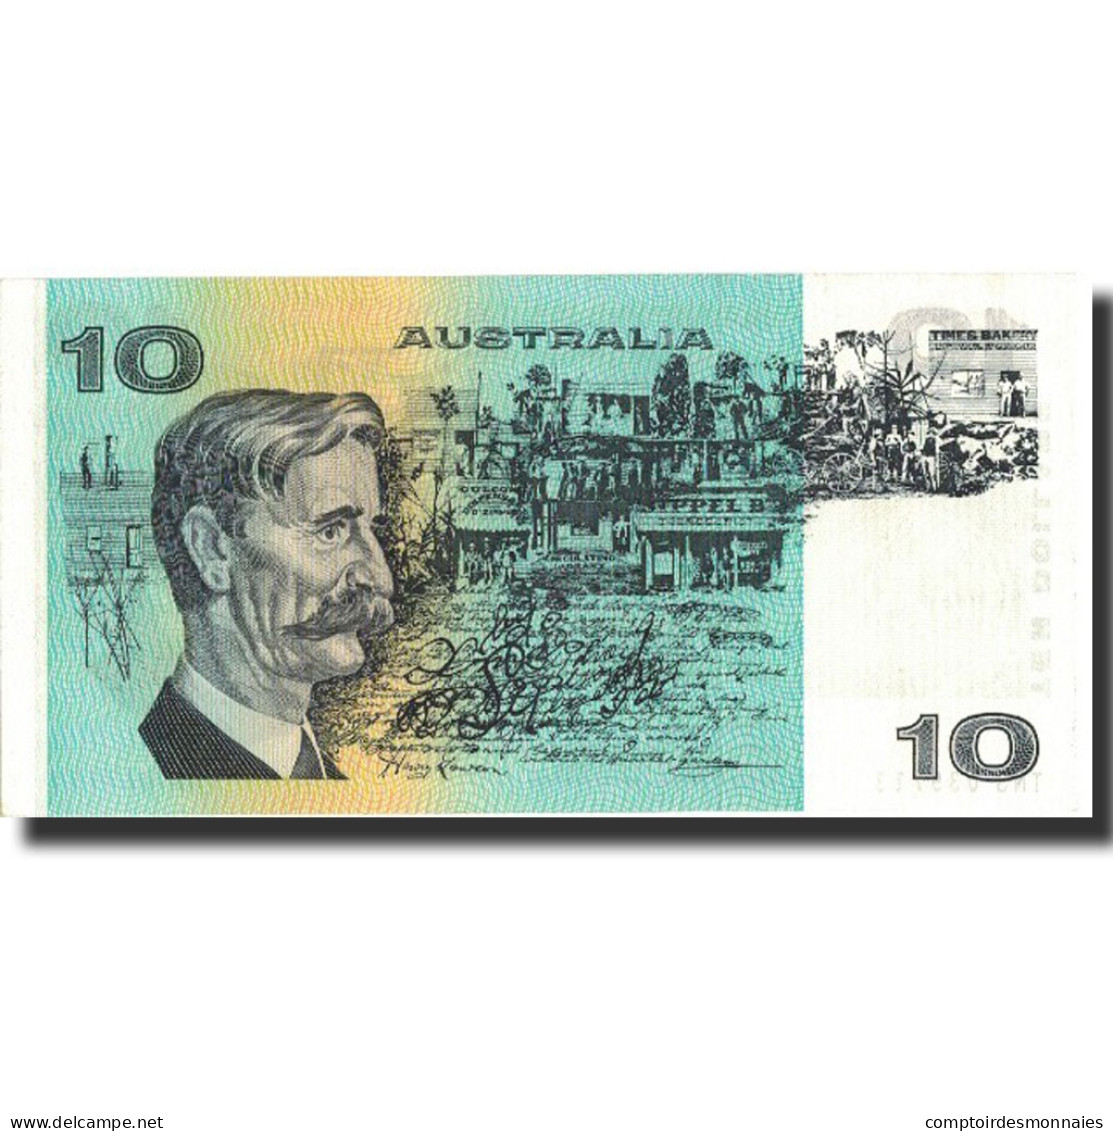 Billet, Australie, 10 Dollars, 1976, 1976, KM:45b, SPL - 1974-94 Australia Reserve Bank (papier)